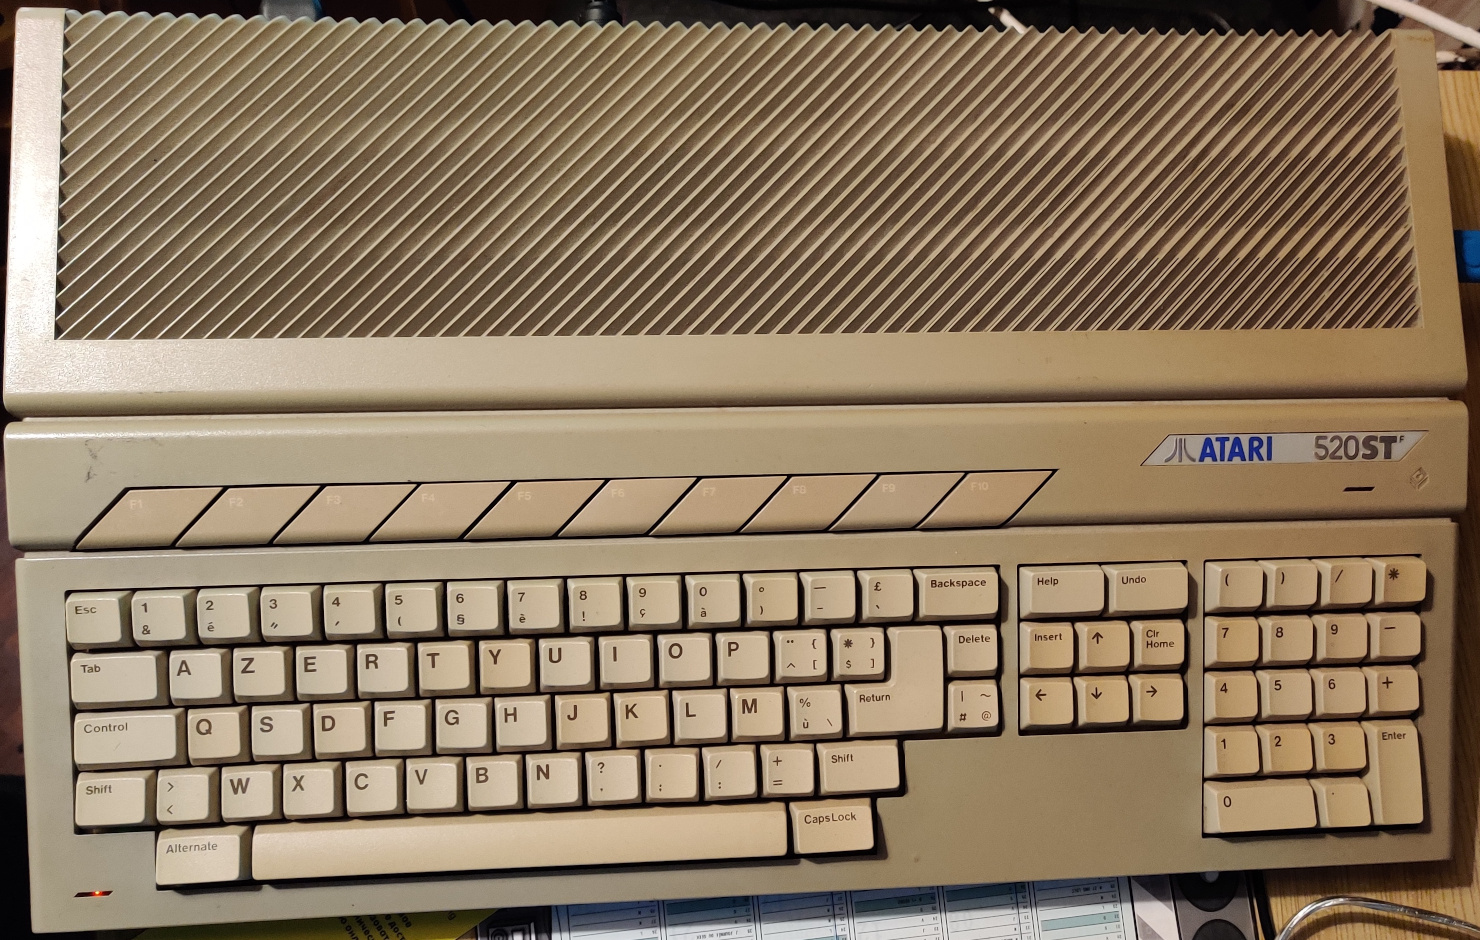 Good old Atari 520 STF